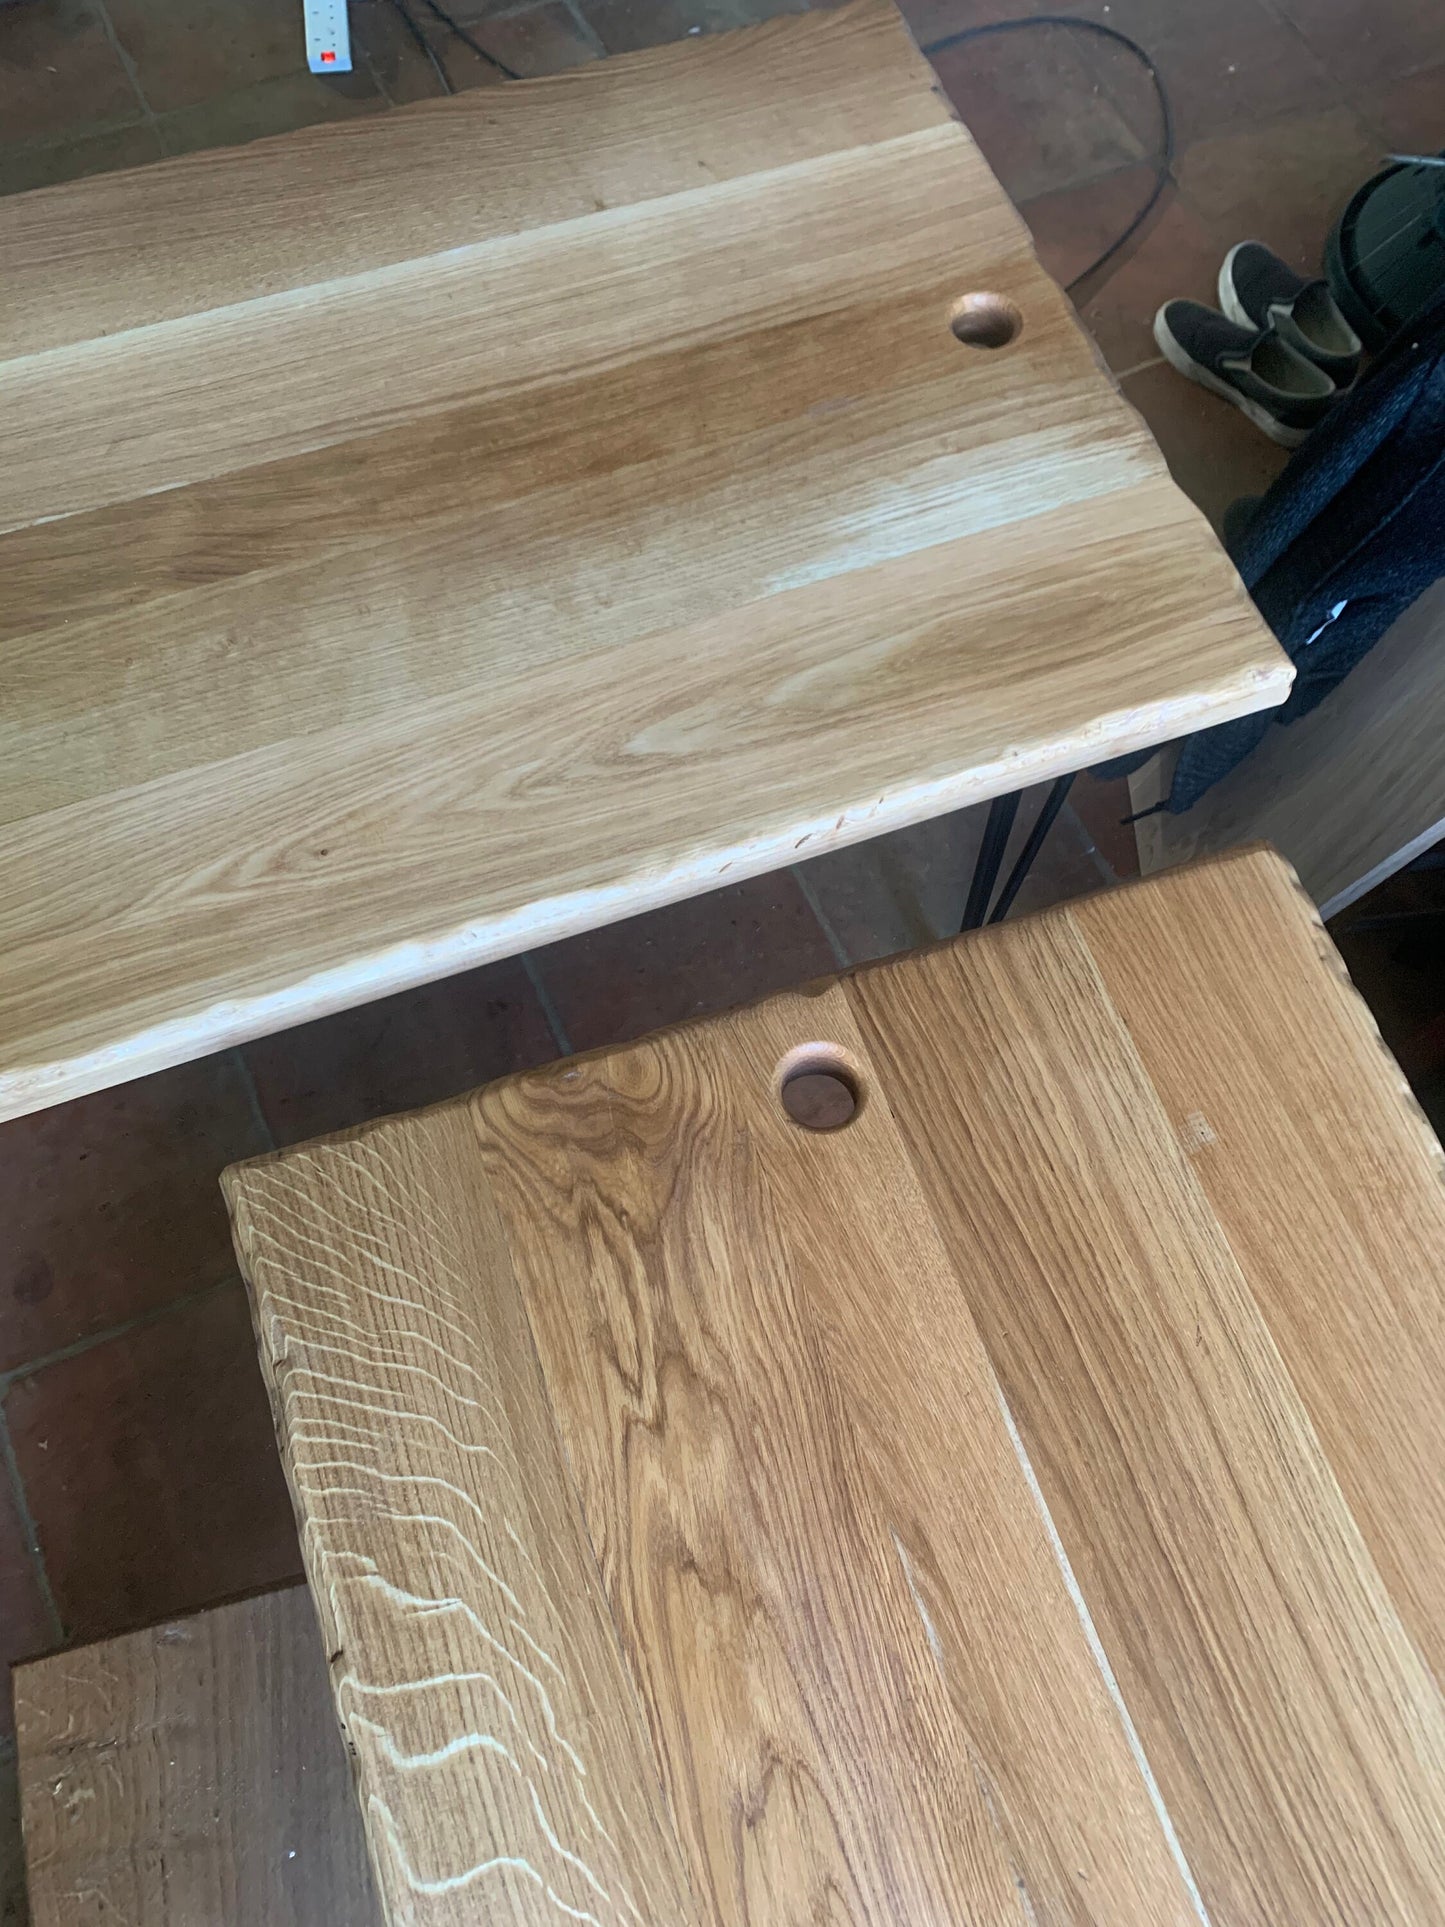 Oak Desk for Office or Bedroom - Farmhouse Desk with Wood Legs - Wooden Console Desk & Table